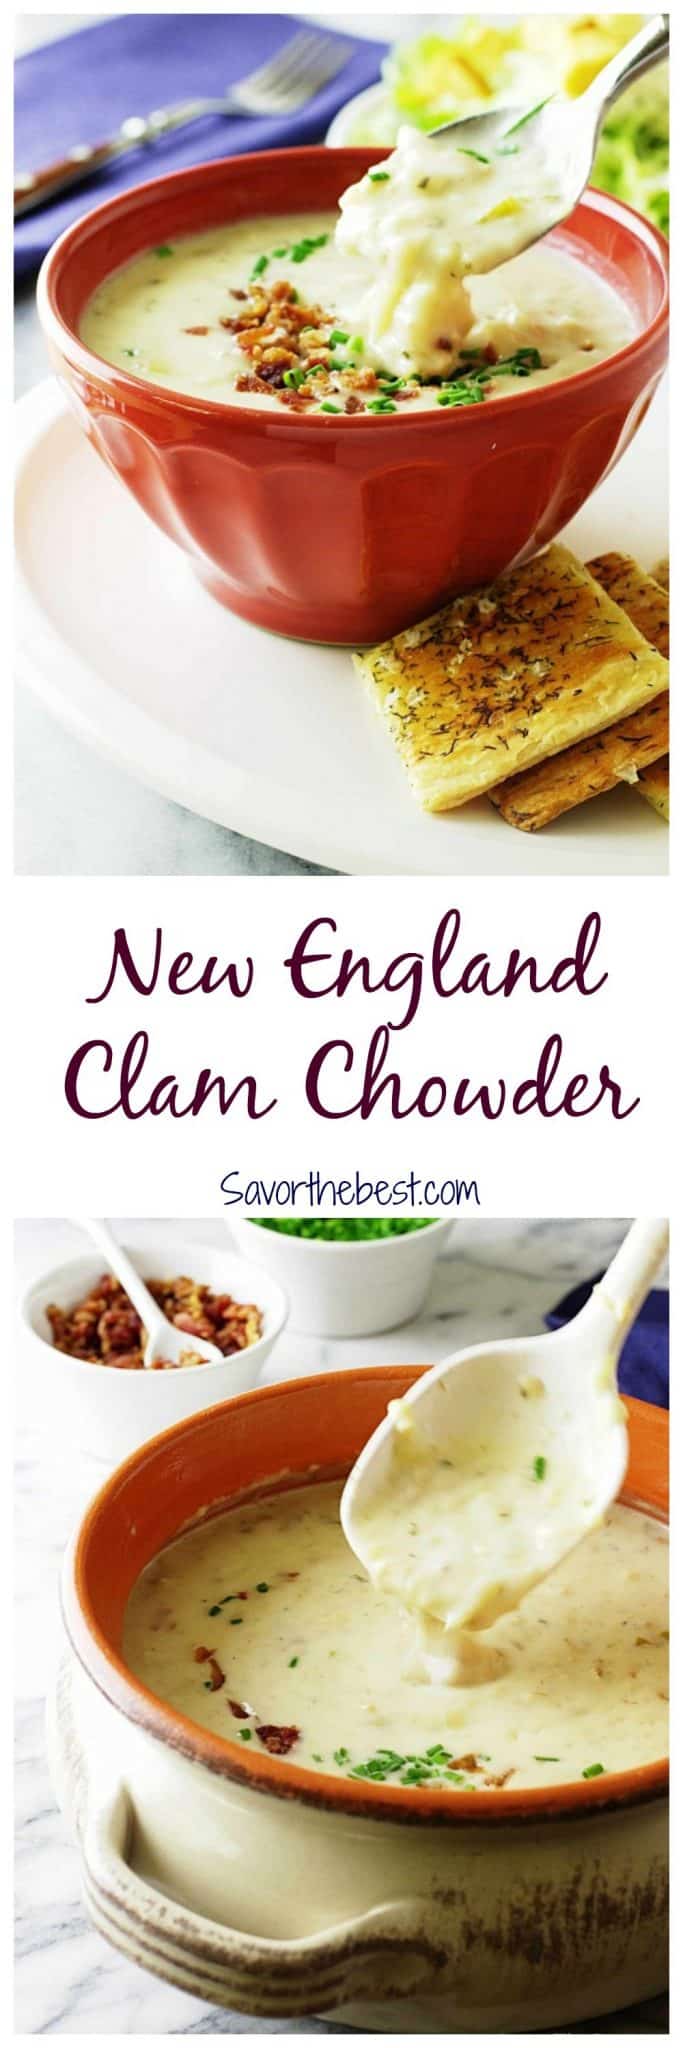 New England Clam Chowder - Savor the Best